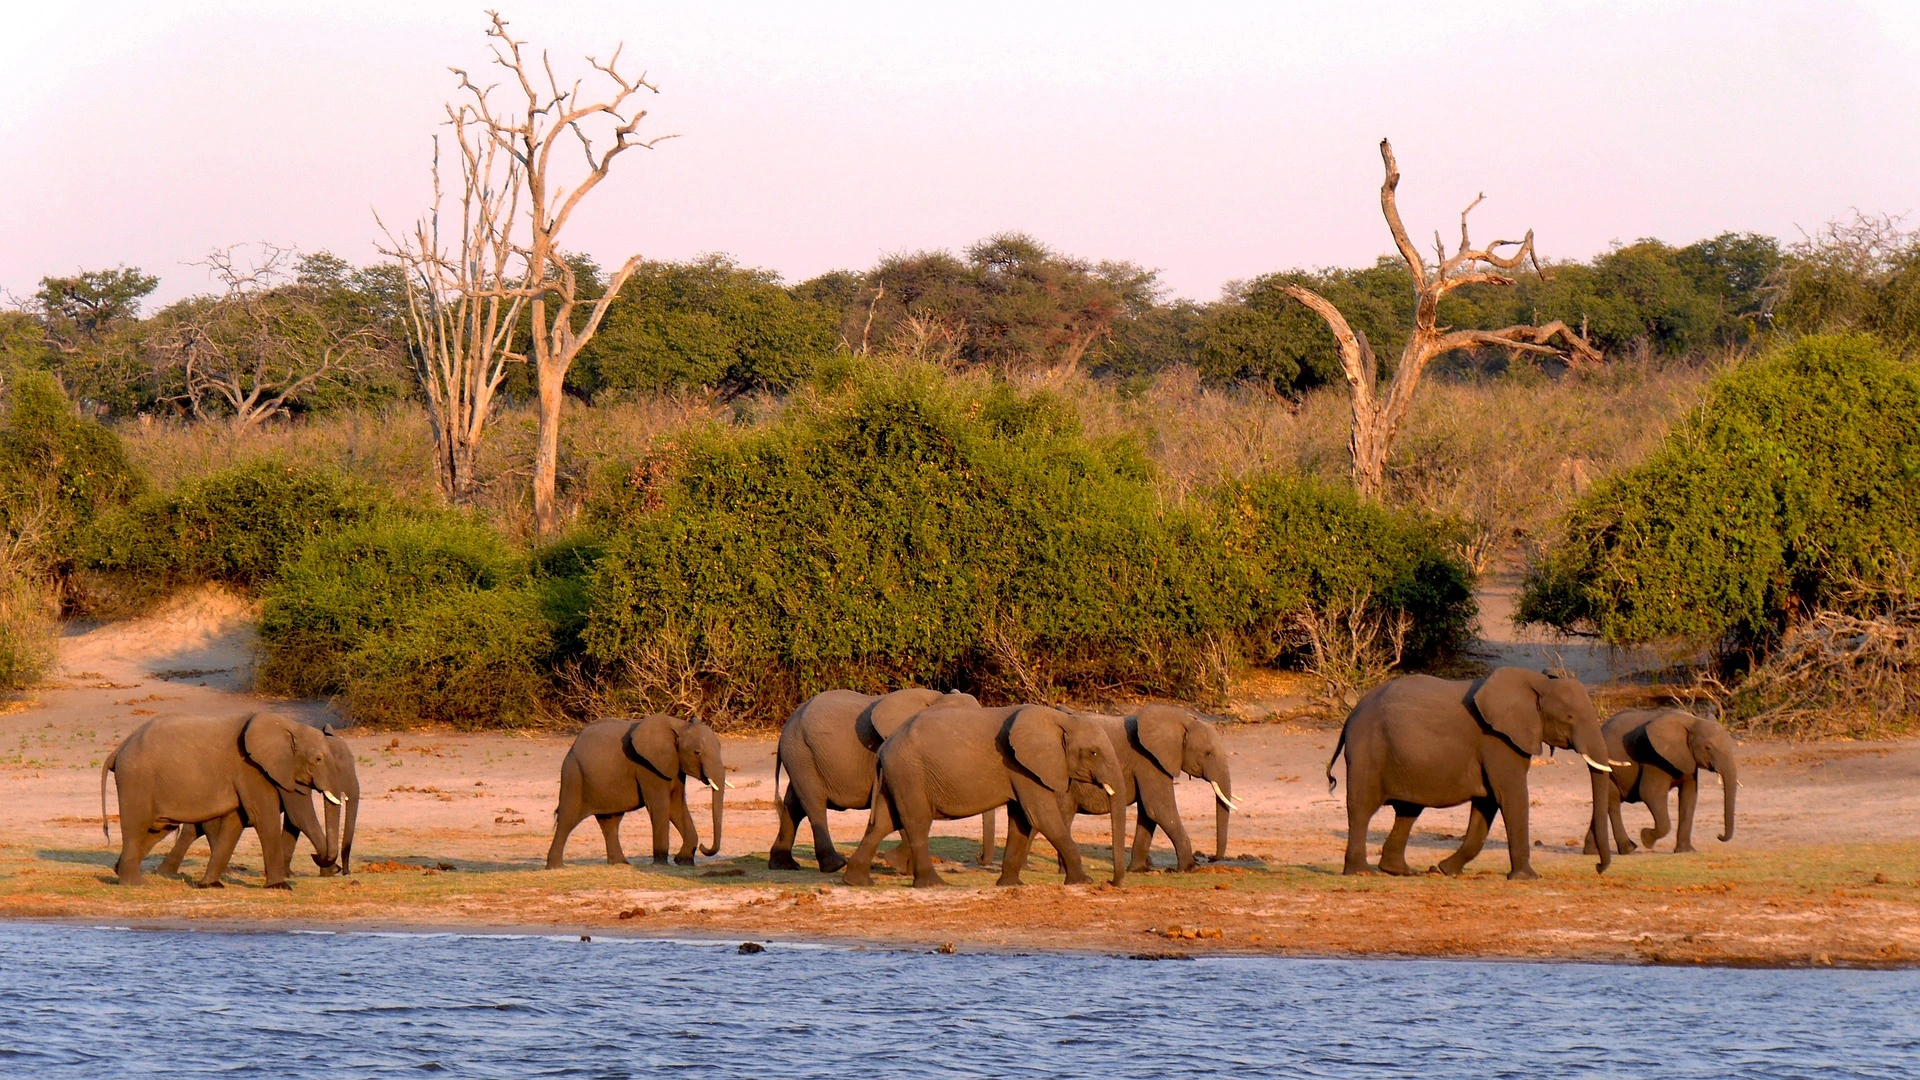 Safaris in Africa - Elephants in Chobe National Park